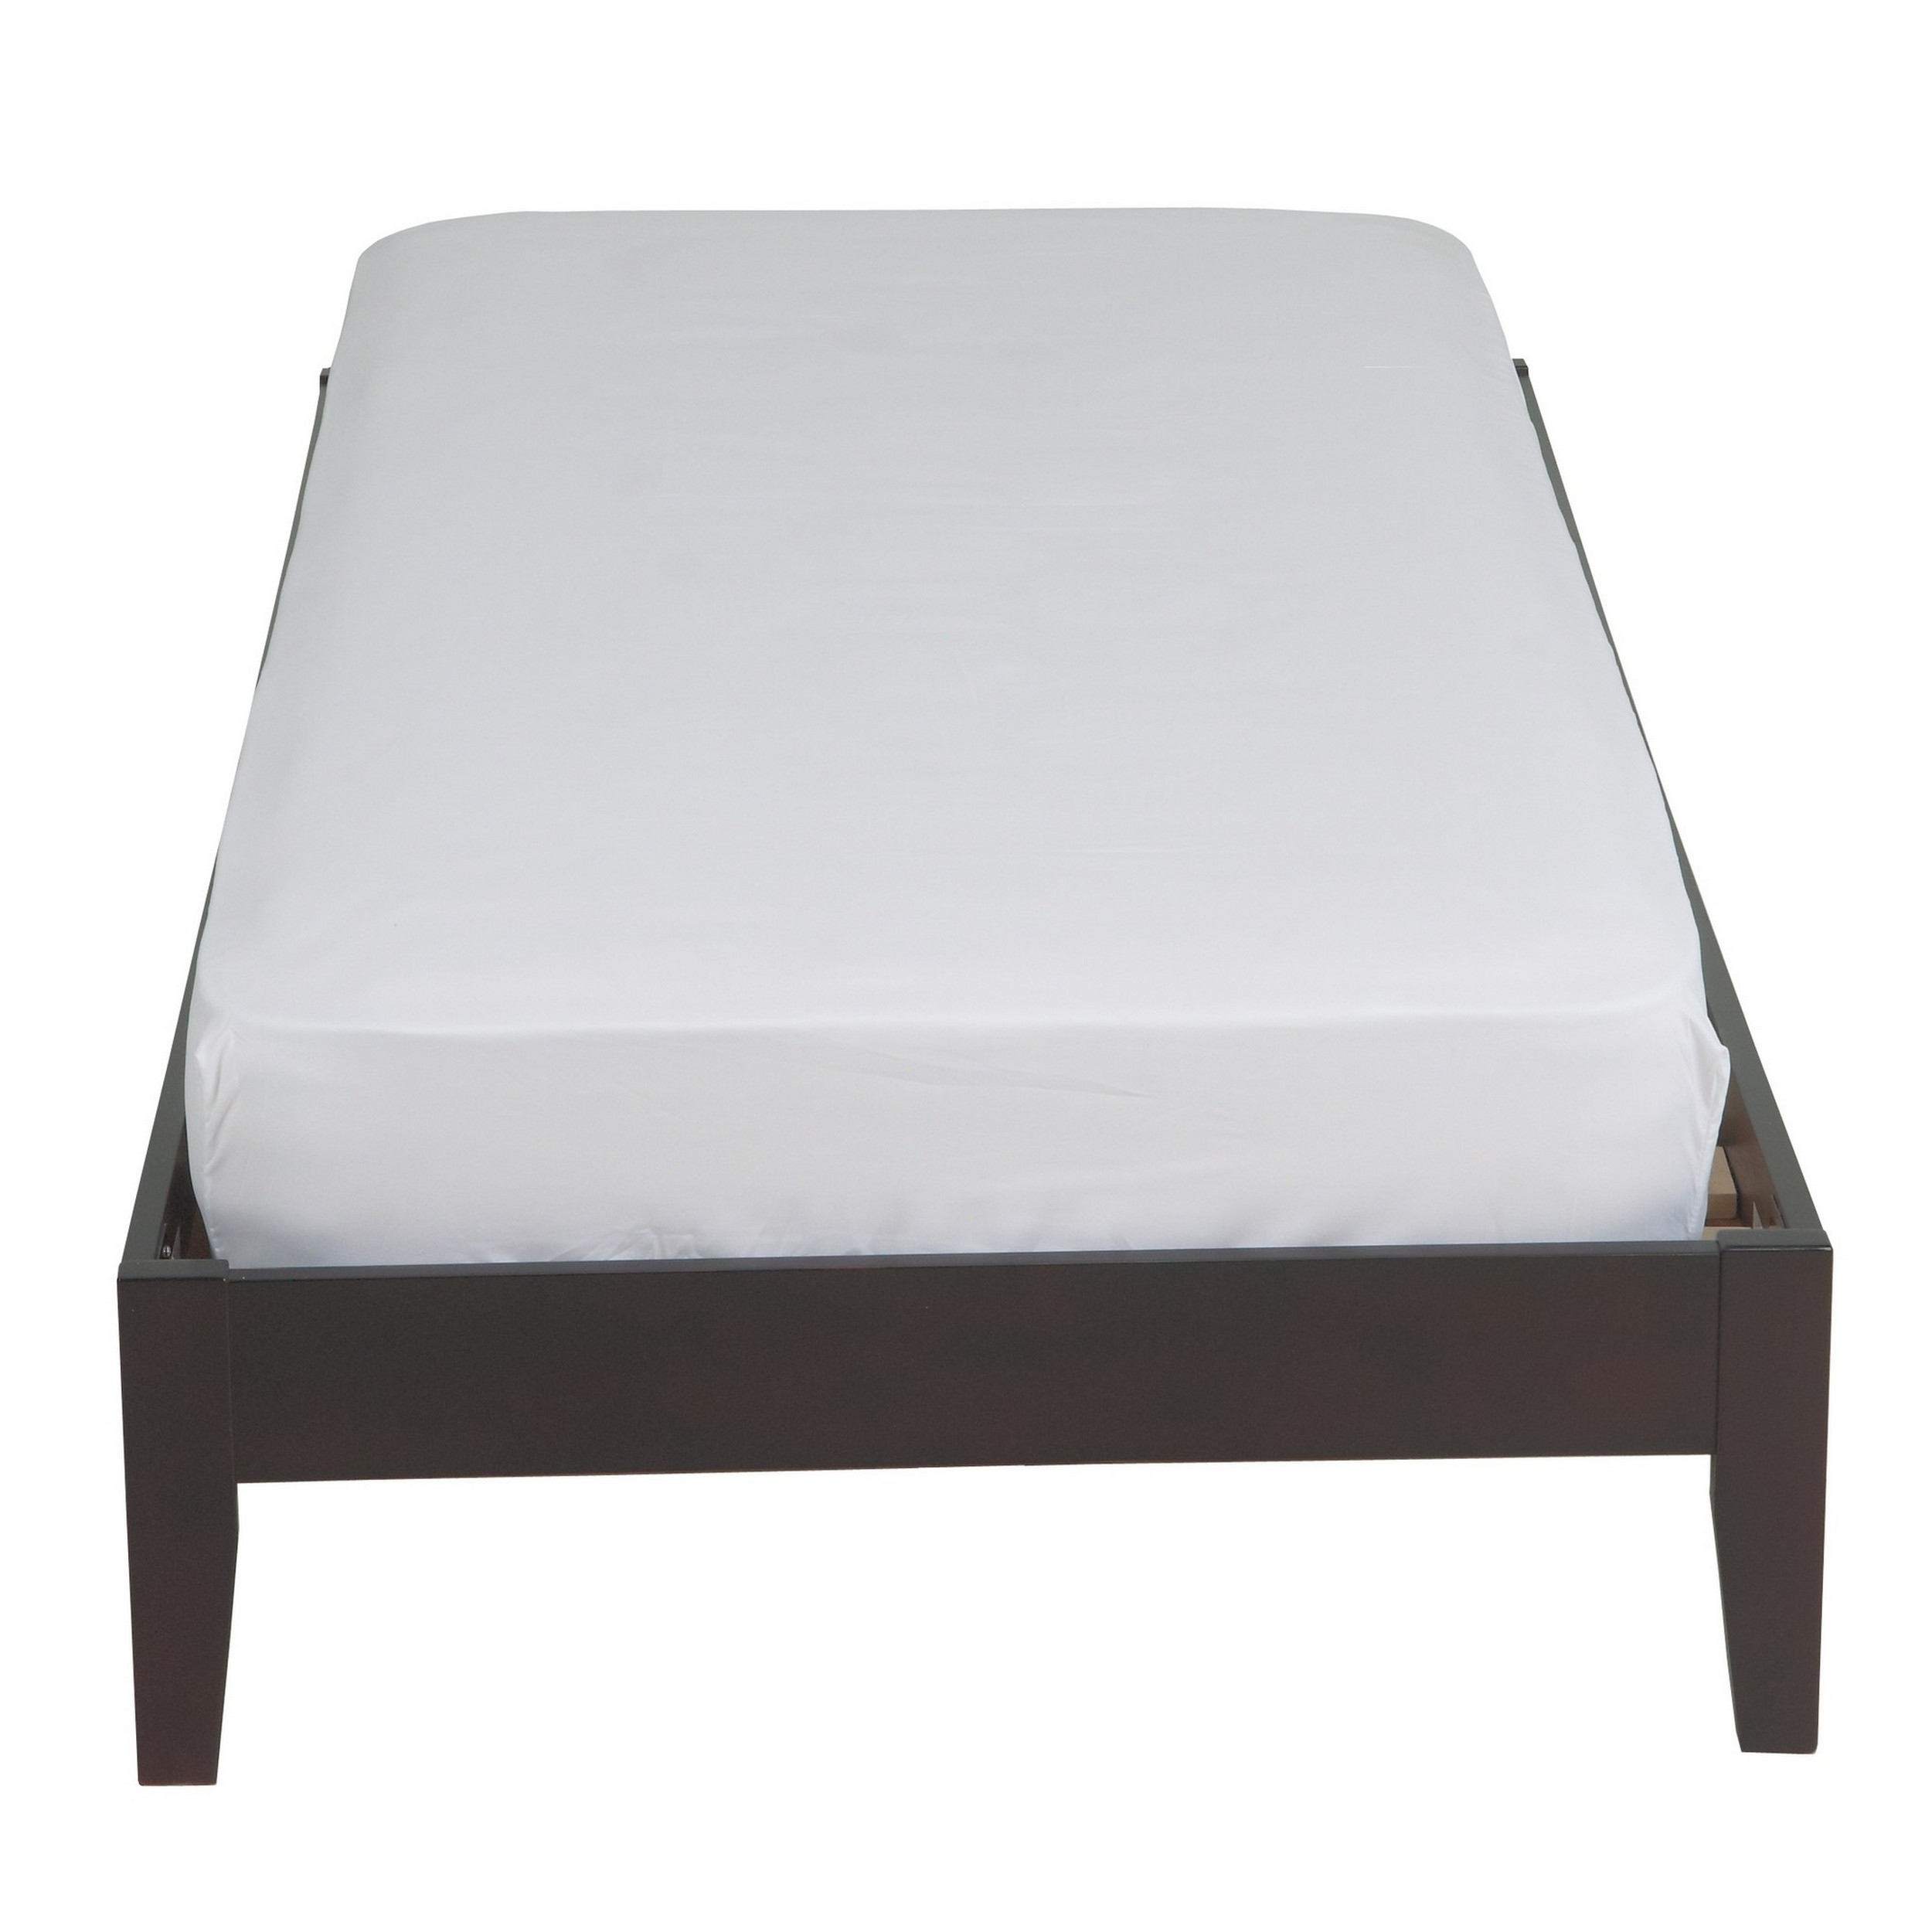 Evelyn Low Profile Full Size Platform Bed, Slats, Rich Espresso Brown Wood- Saltoro Sherpi